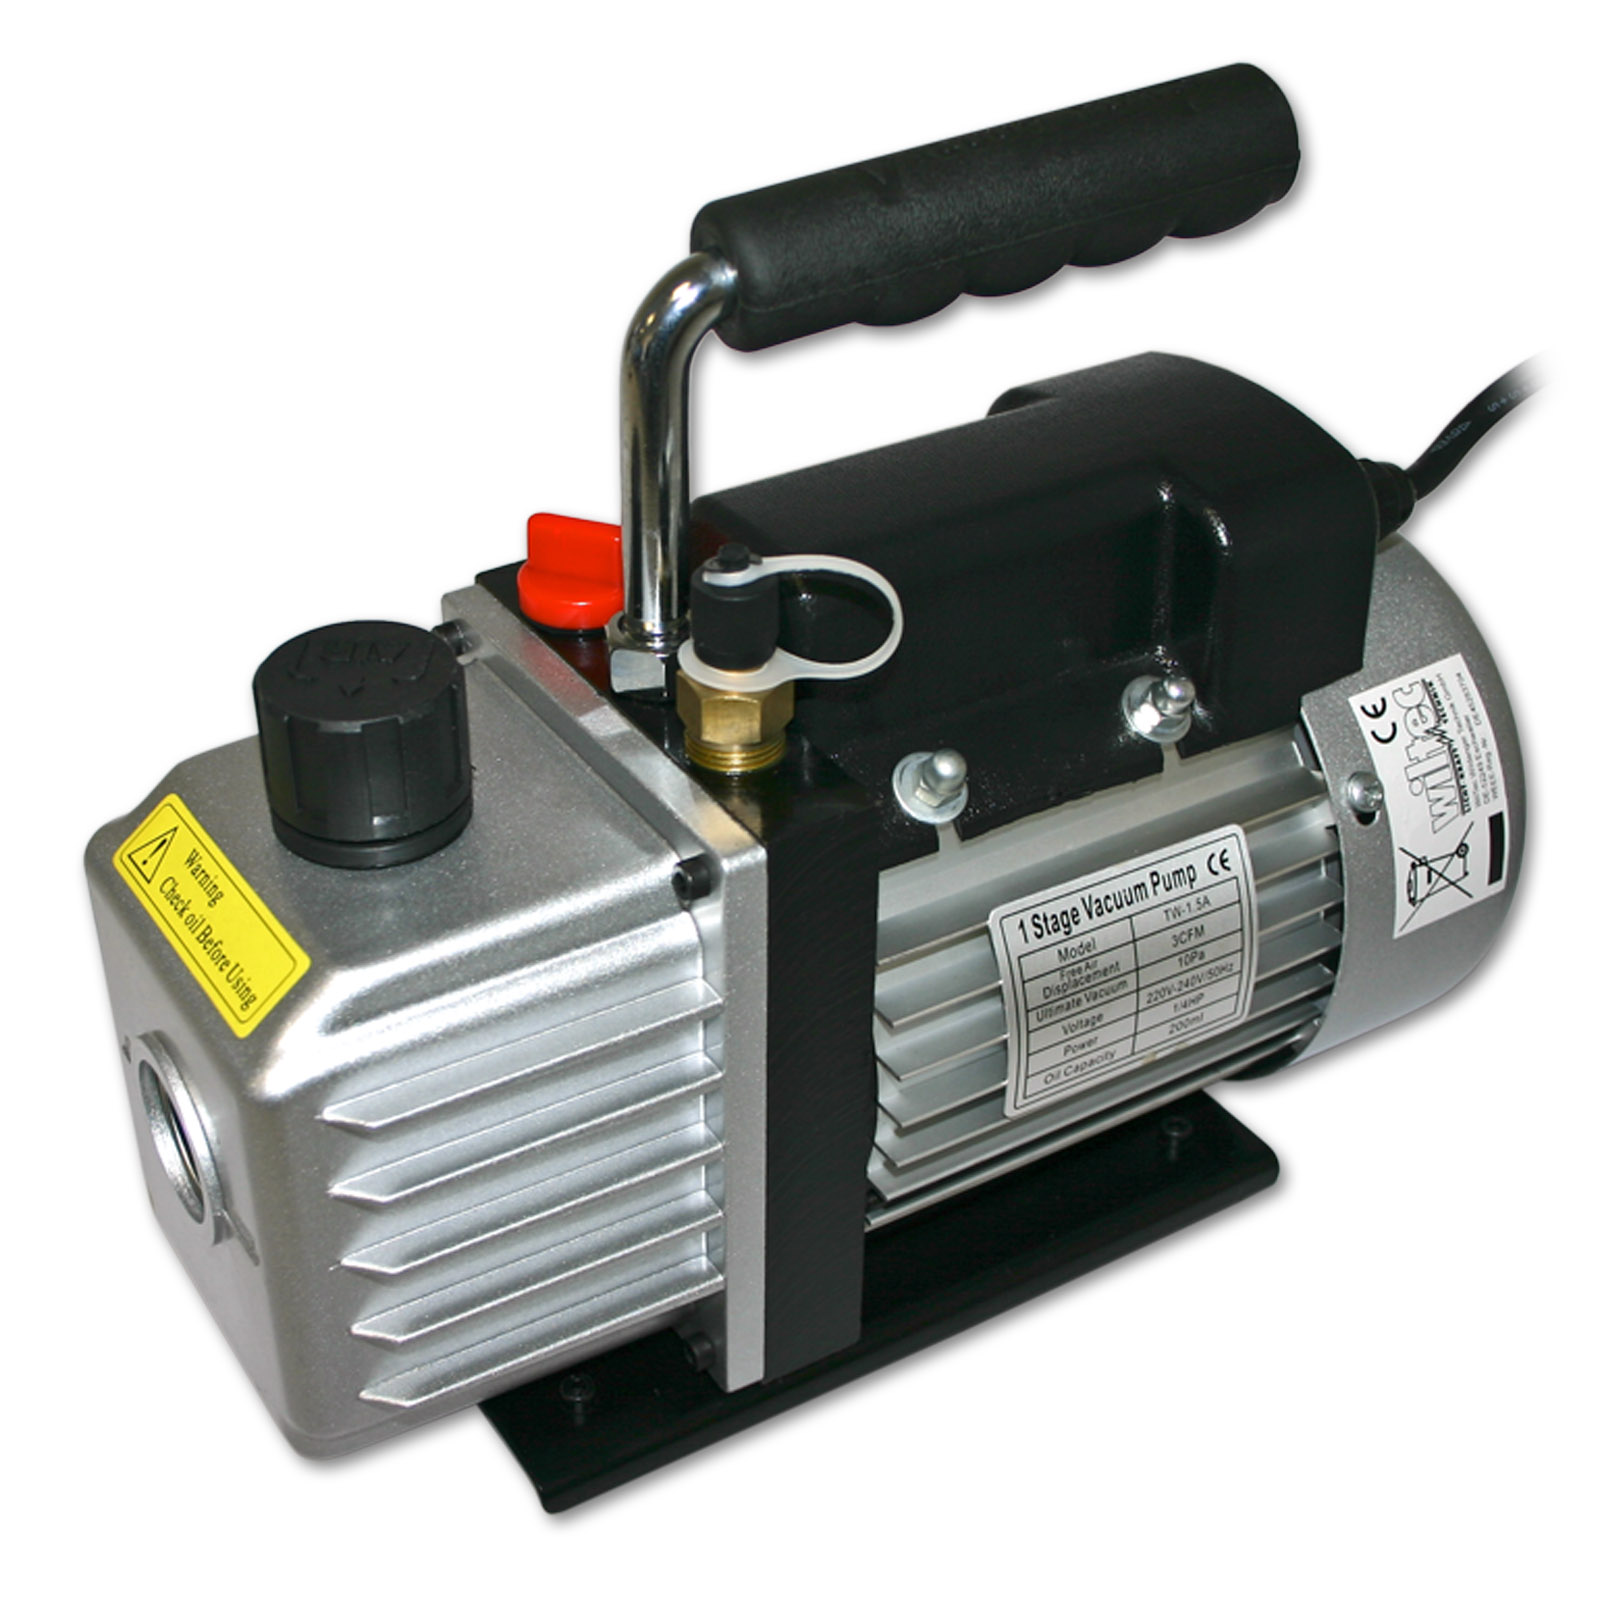 Unterdruckpumpe - Vakuumpumpe Vakuum Pumpe 58l - 2cfm / 10Pa